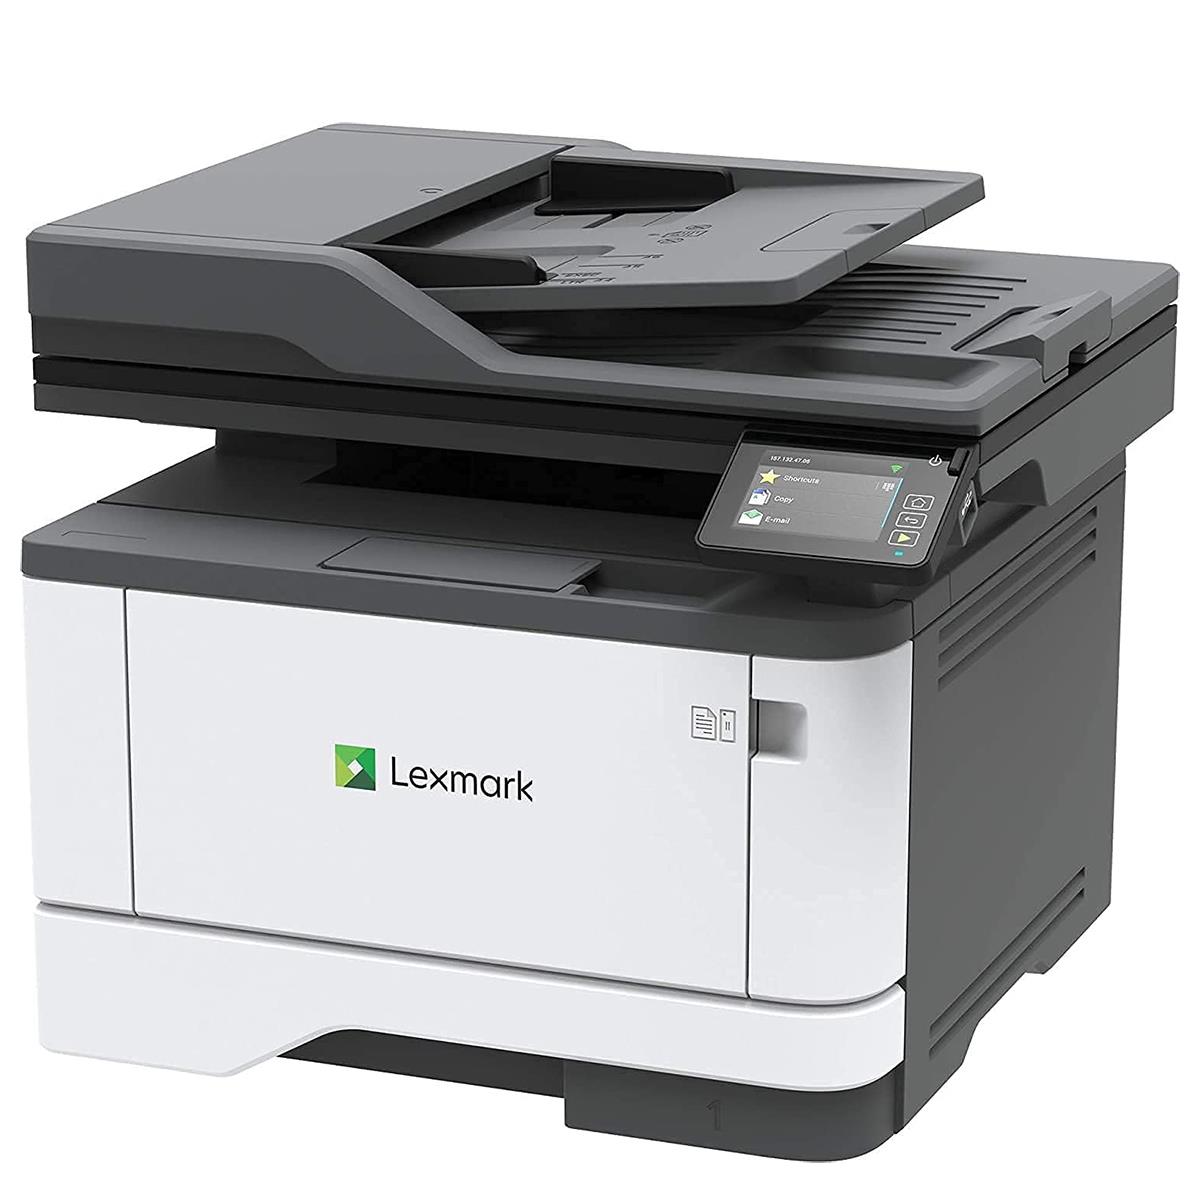 Image of Lexmark MB3442i Multifunction Wireless Duplex Monochrome Laser Printer